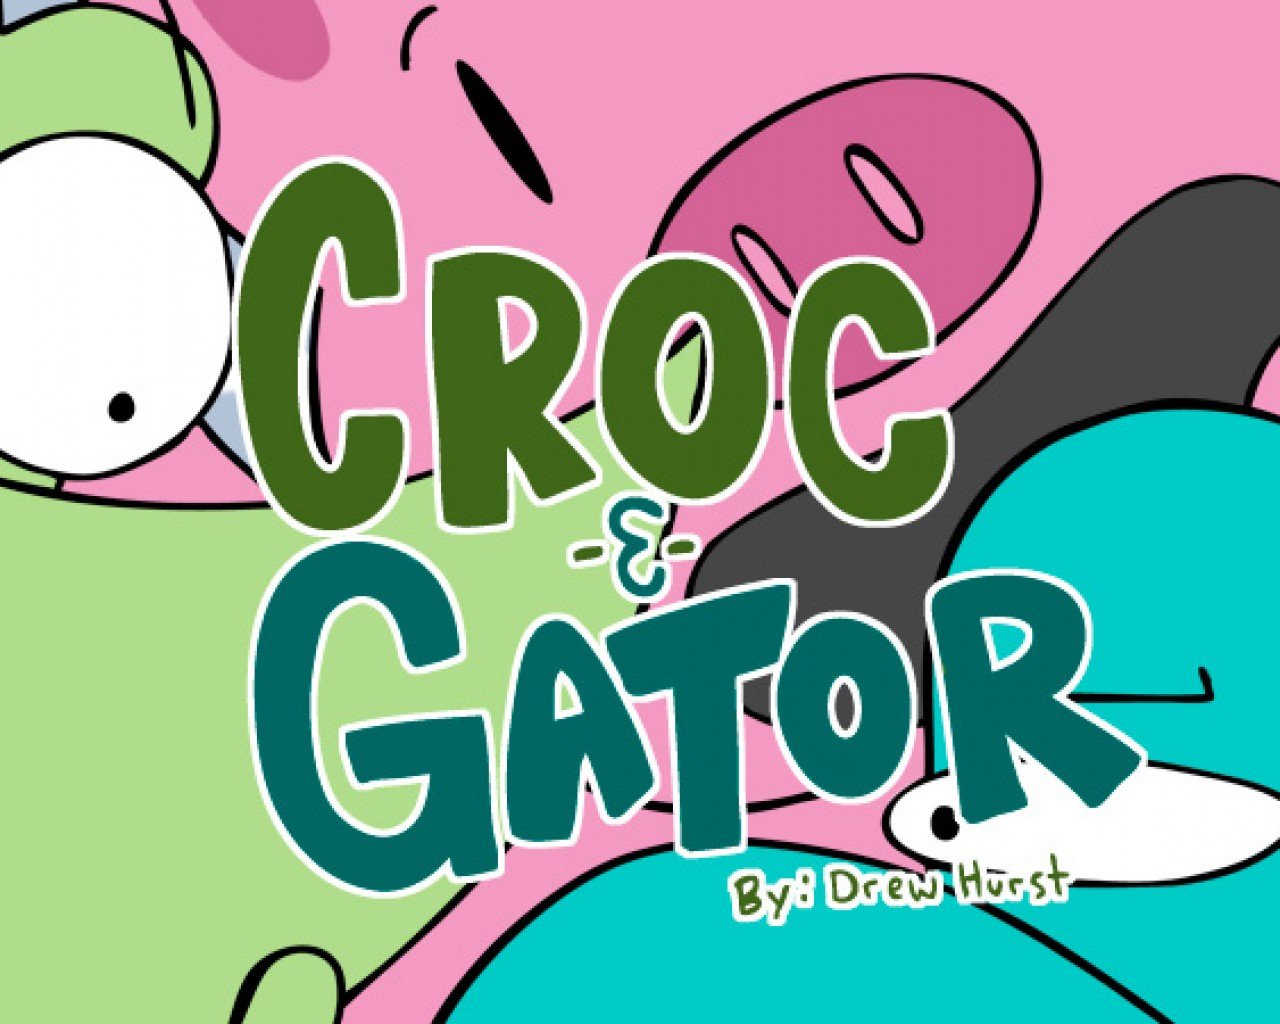 Poster Image for Croc & Gator